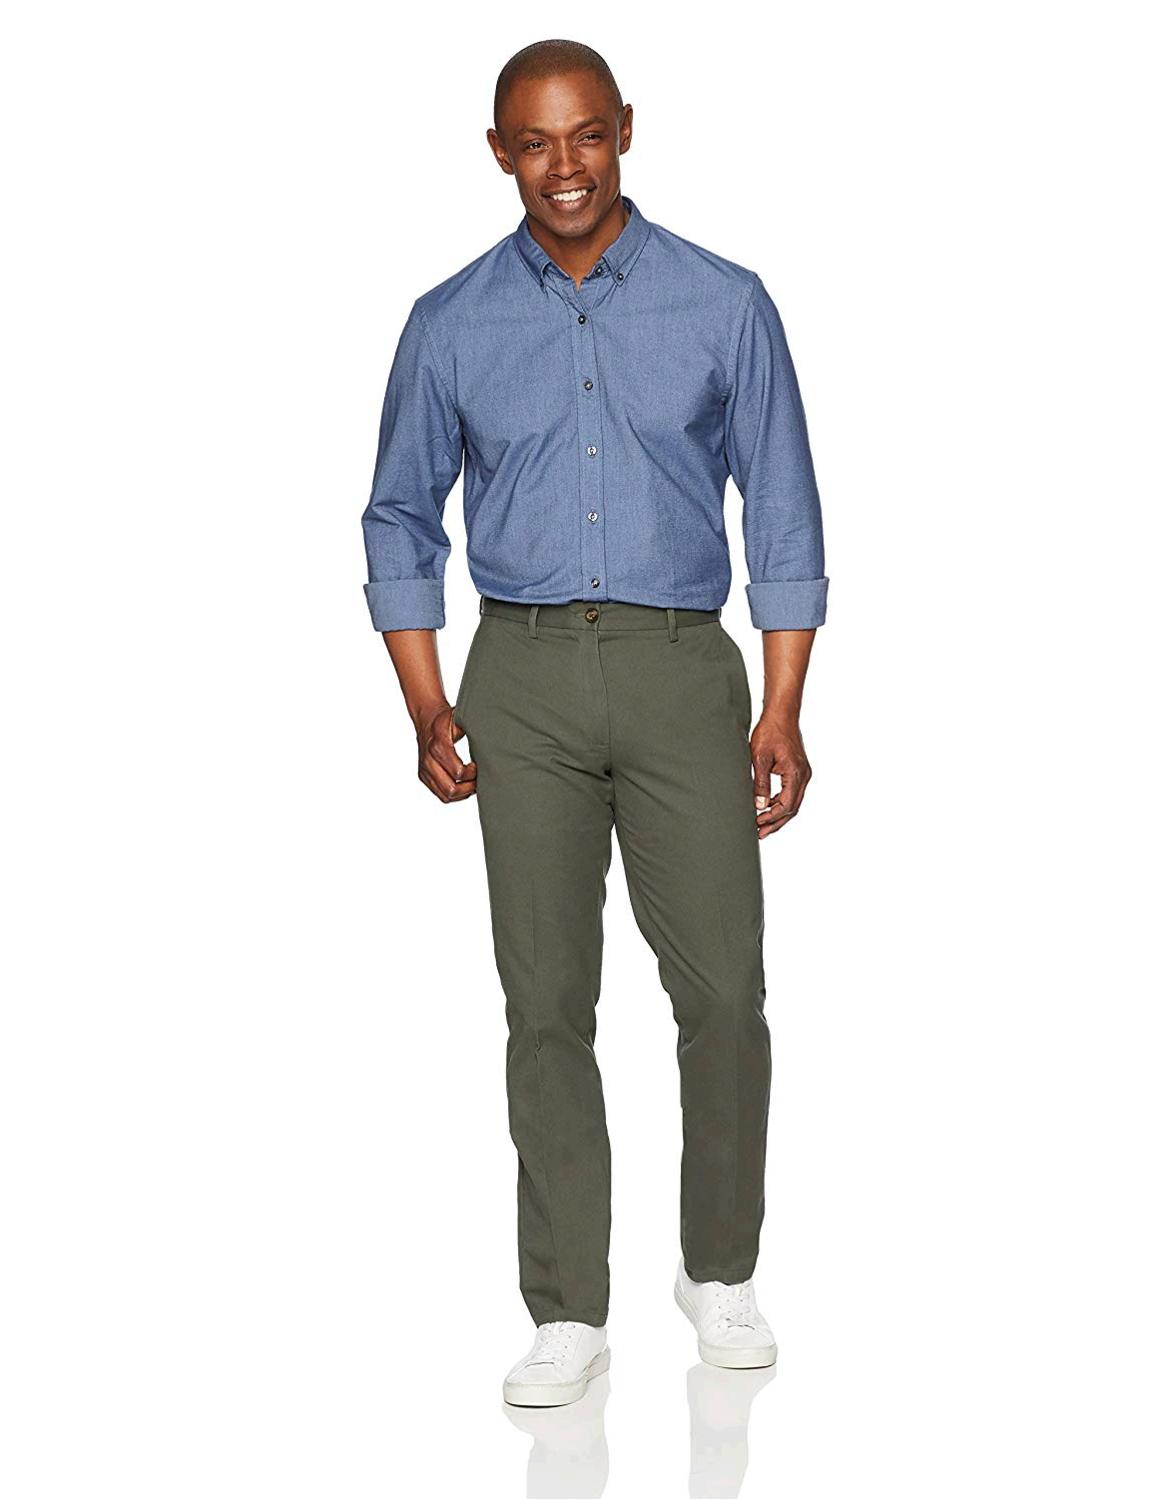 Essentials Men's Slim-Fit Wrinkle-Resistant, Olive, Size 35W x 30L udFi ...